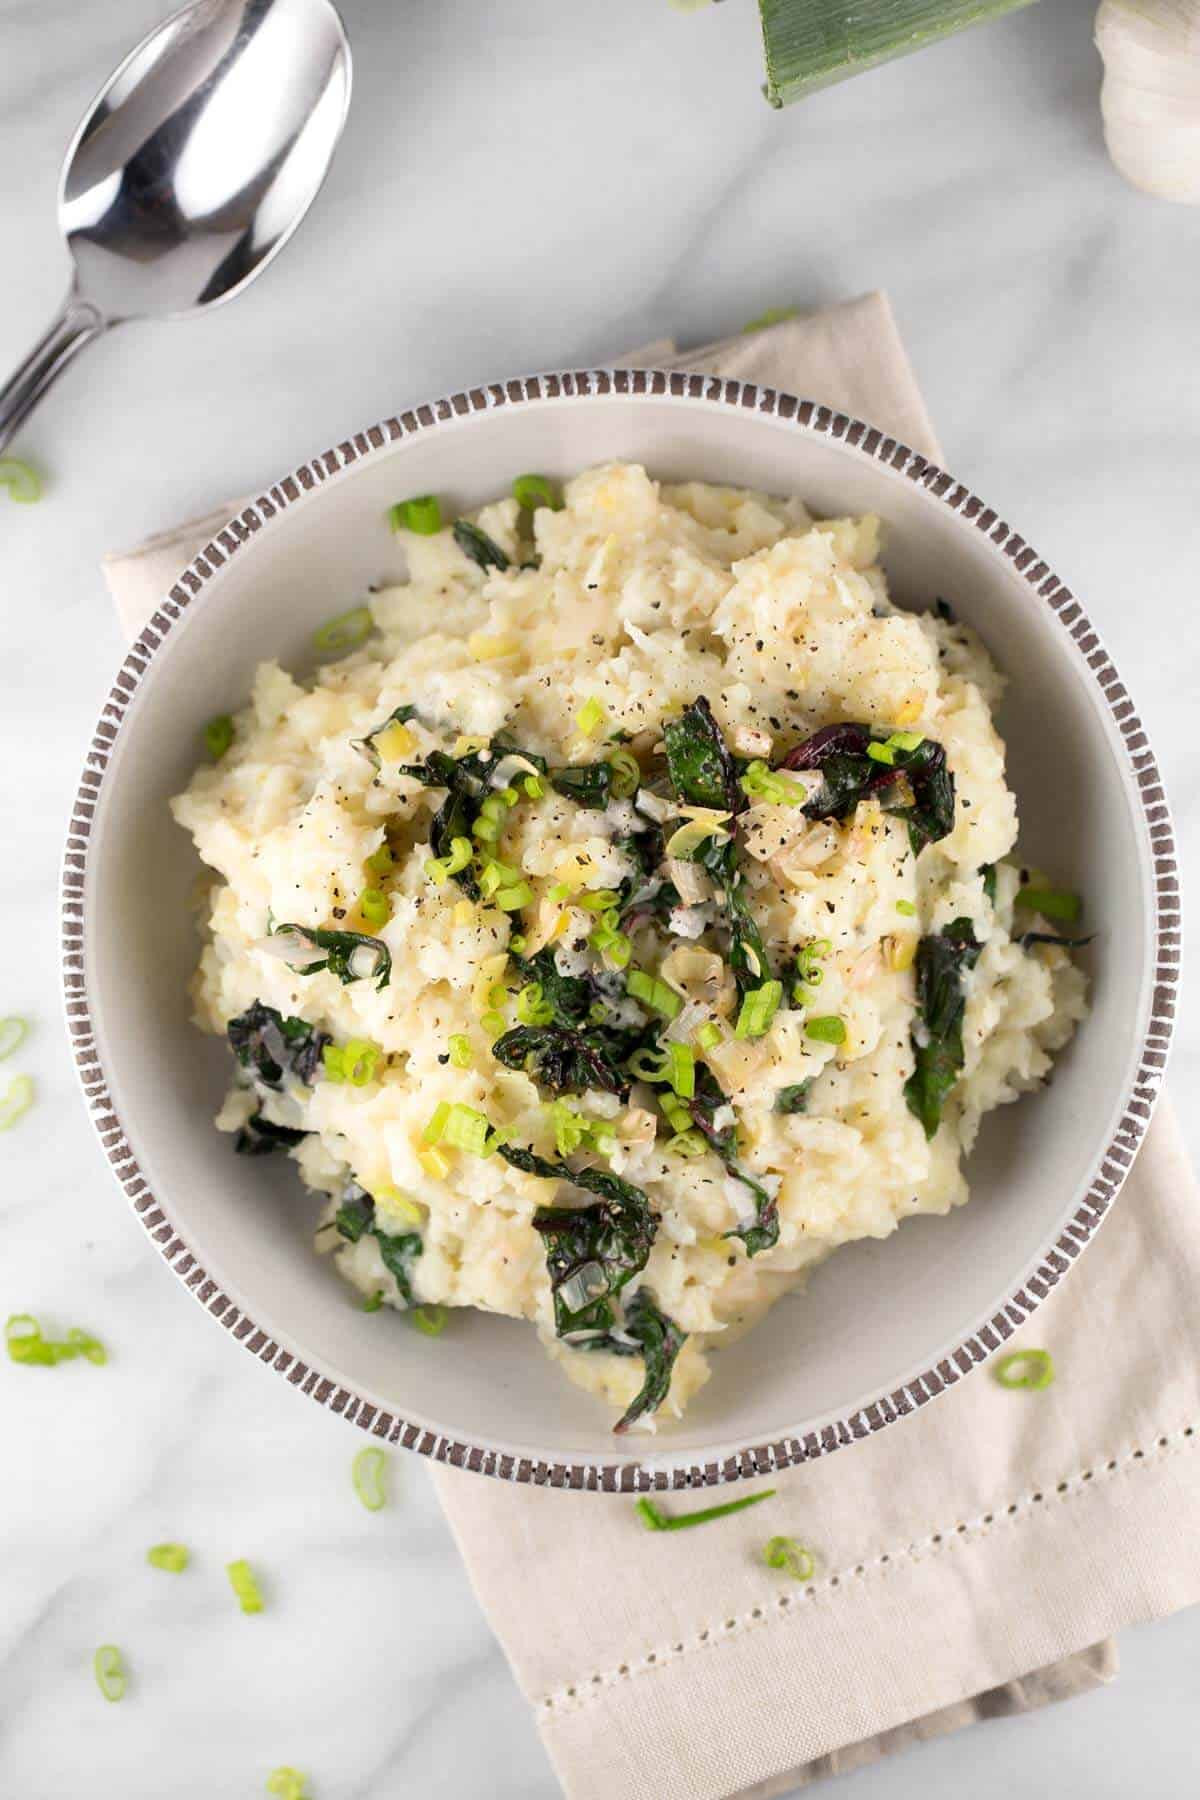 Recipes for Cauliflower Mashed Potatoes Healthy 20 Ideas for Healthy Cauliflower Mashed Potatoes Recipe